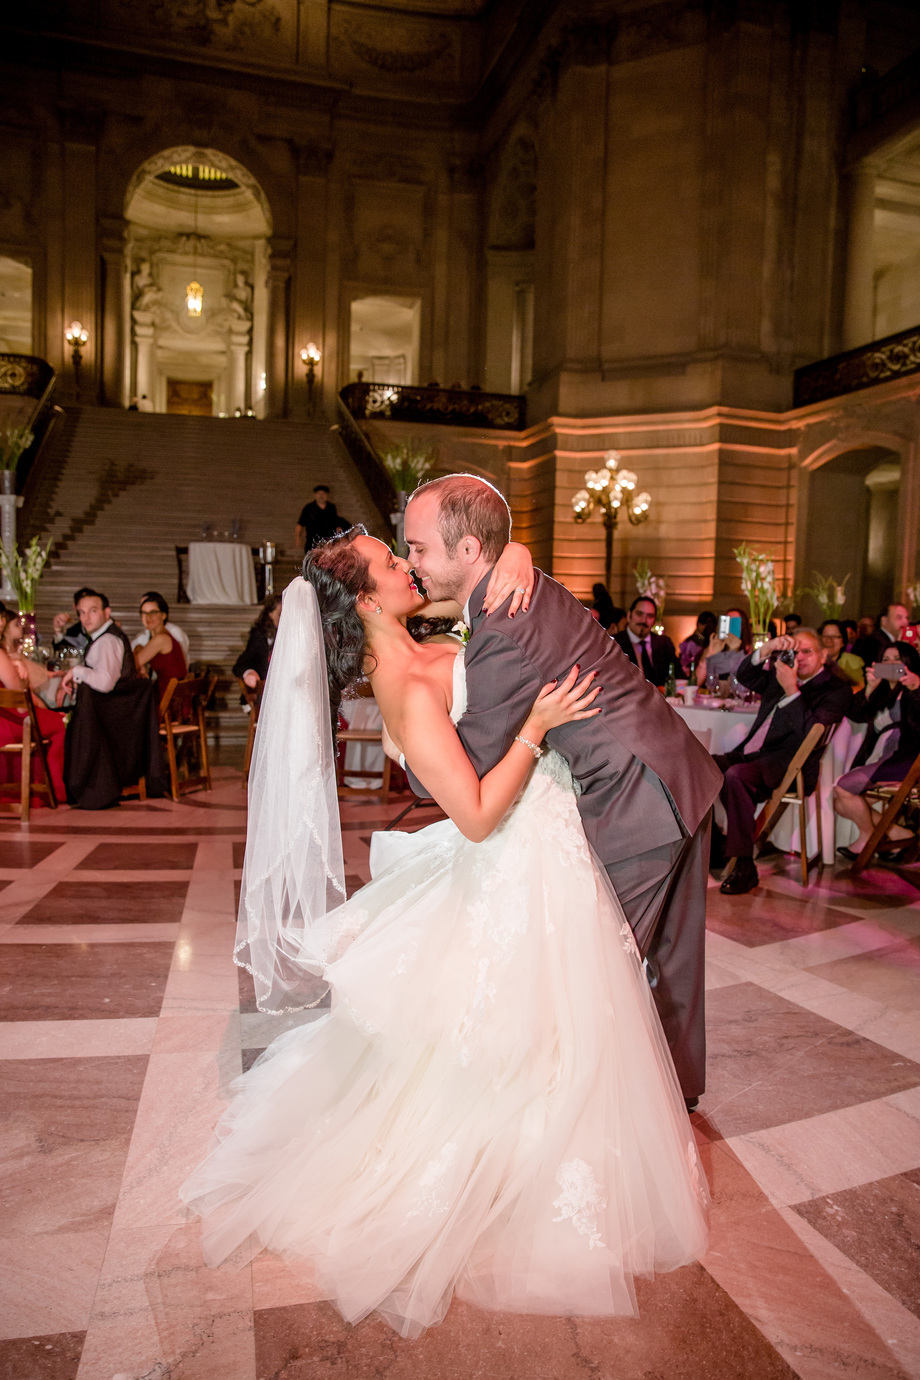 San Francisco City Hall wedding reception first dance under the rotunda